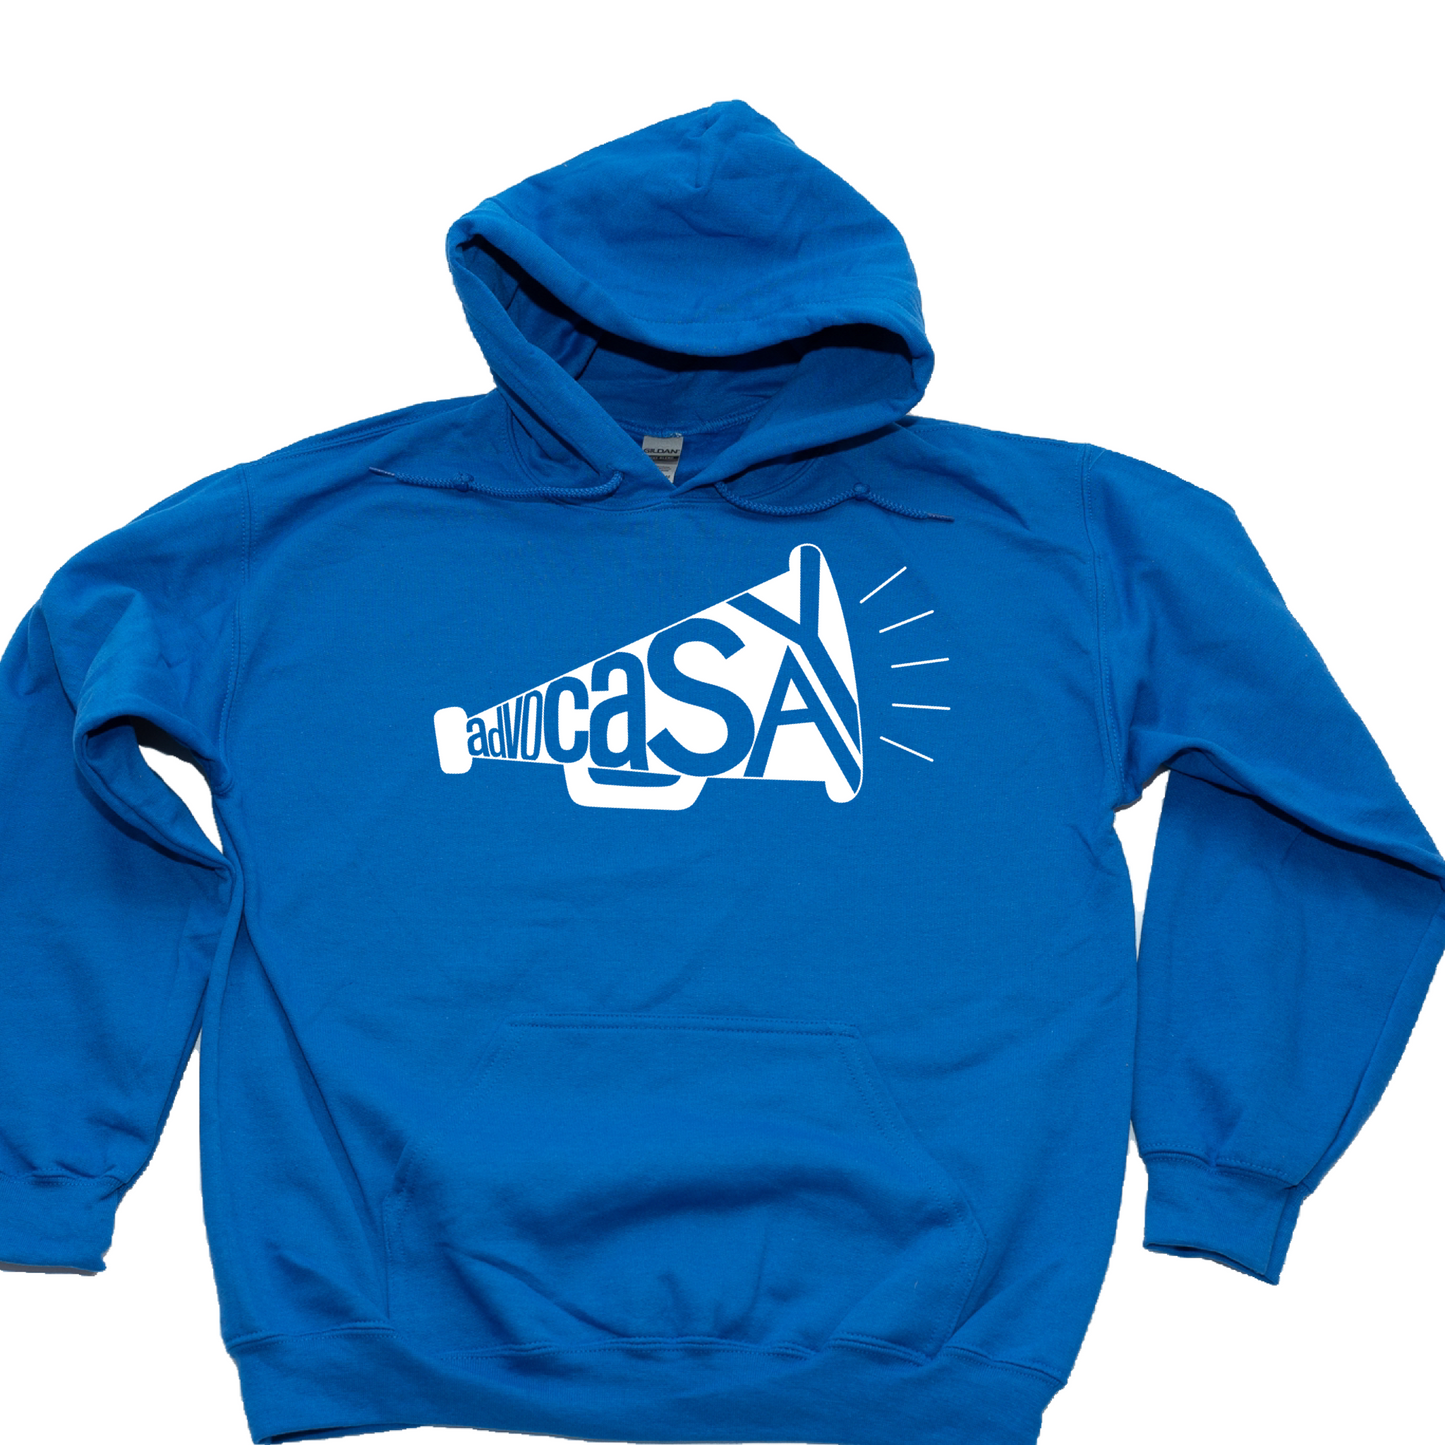 AdvocaSAY Logo Crew Sweatshirt/Hoodie